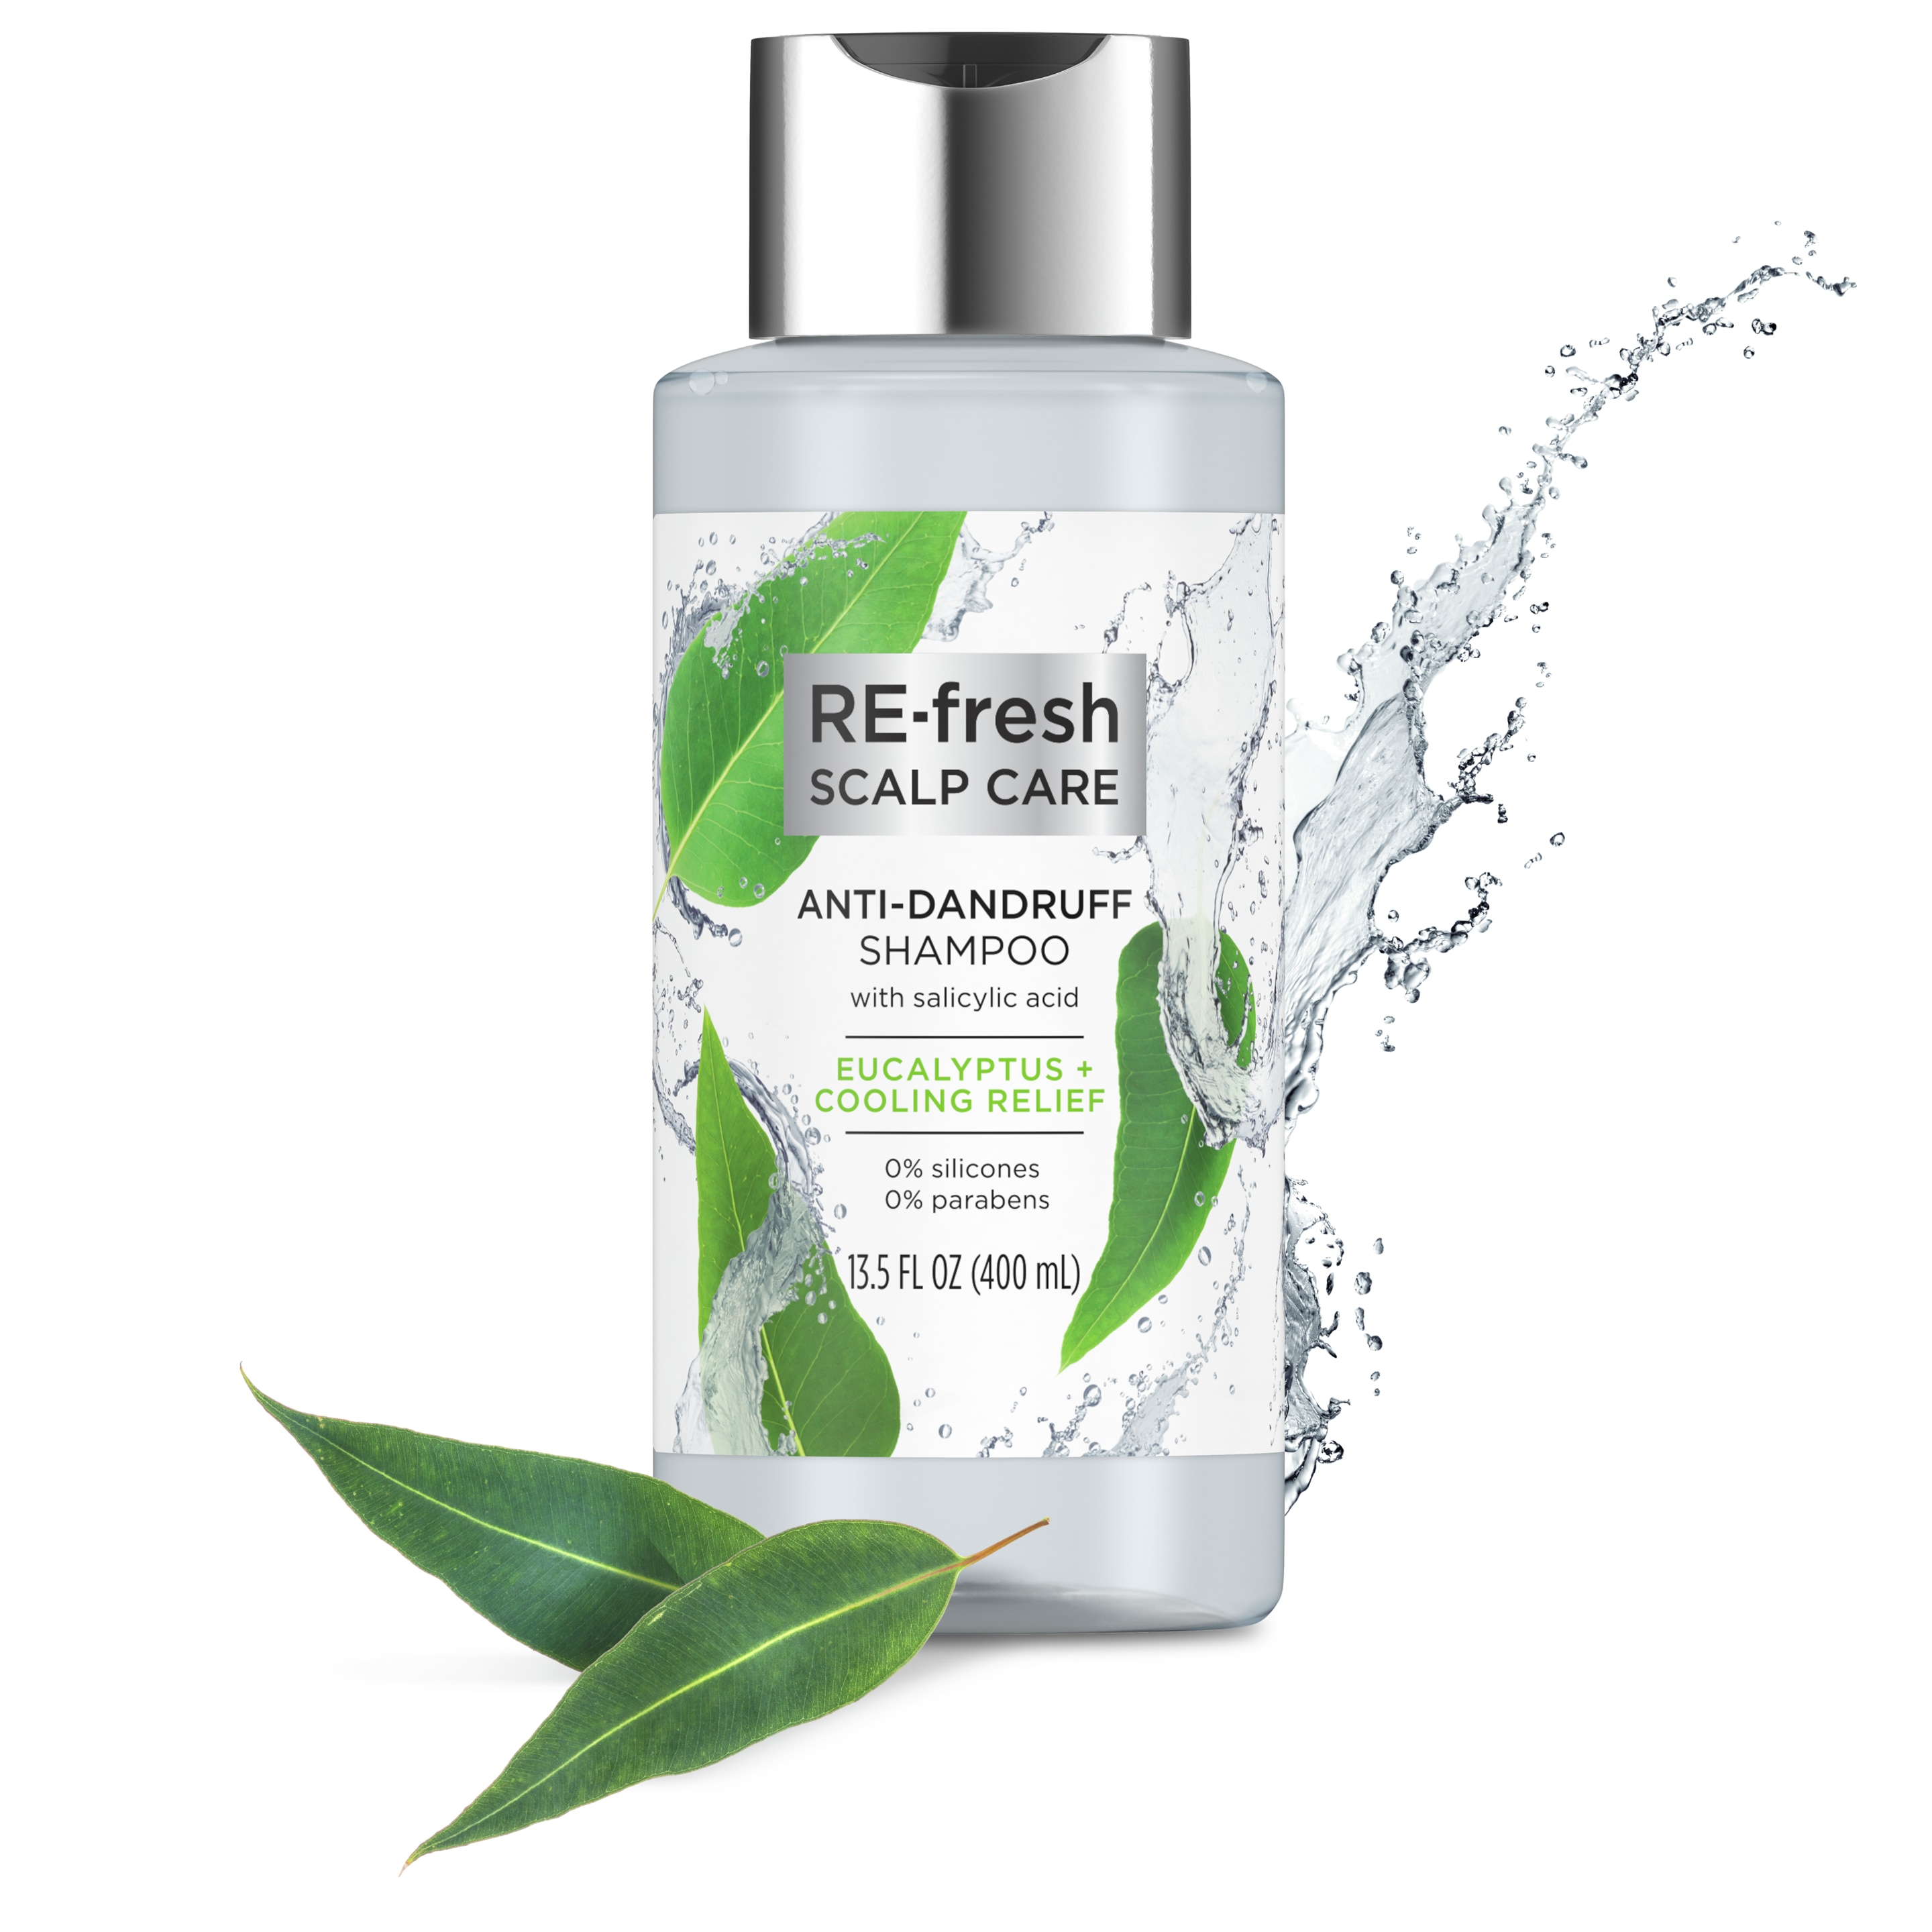 eucalyptus + cooling relief anti-dandruff shampoo